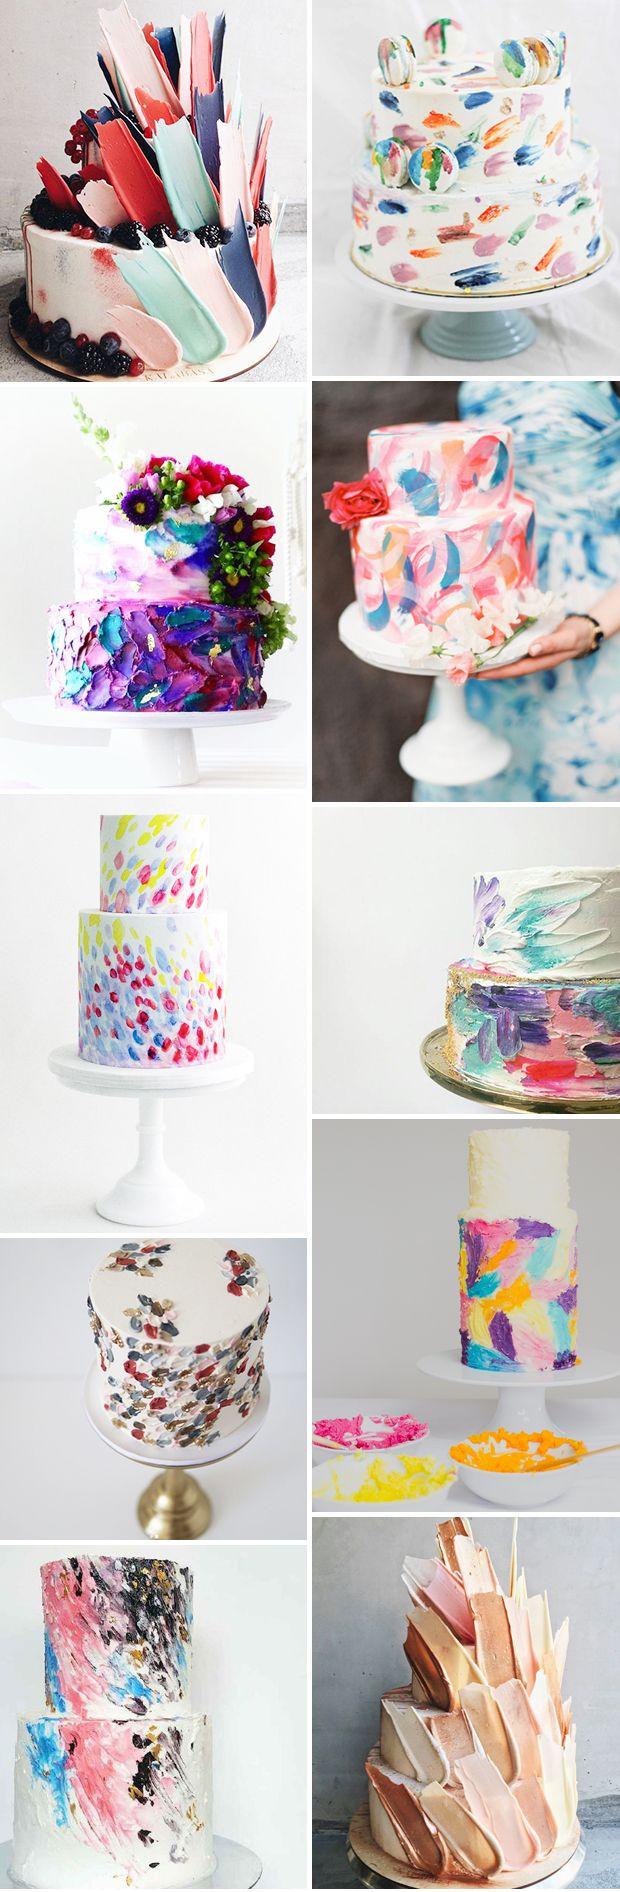 Hochzeit - Brushstroke Cakes - 12 Phenomenal Wedding Cake Works Of Art